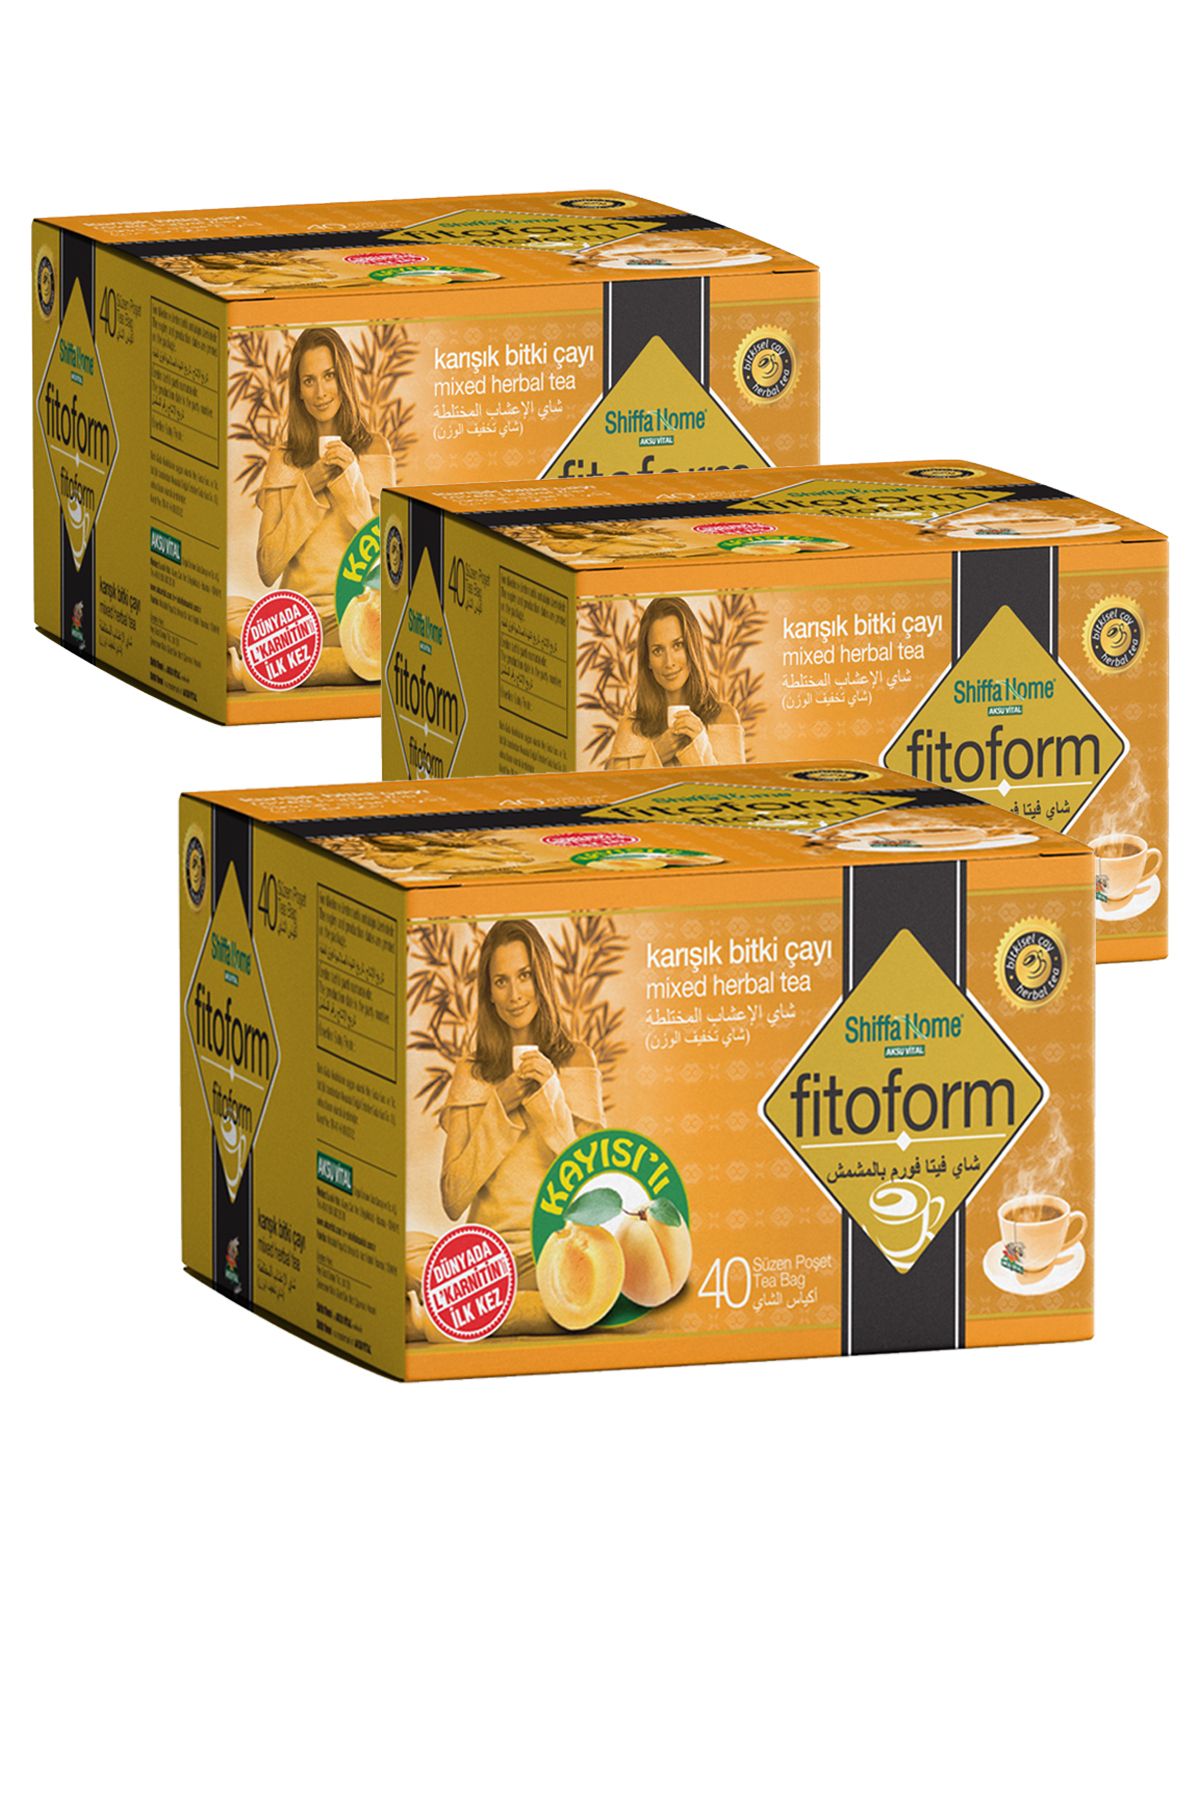 Aksu Vital 3 Kutu Fitoform Kayısılı Bitki Çayı 40 Poşet Kayısılı Fito Form Çay Fitaform Kayısılı Çay Aksu Vital